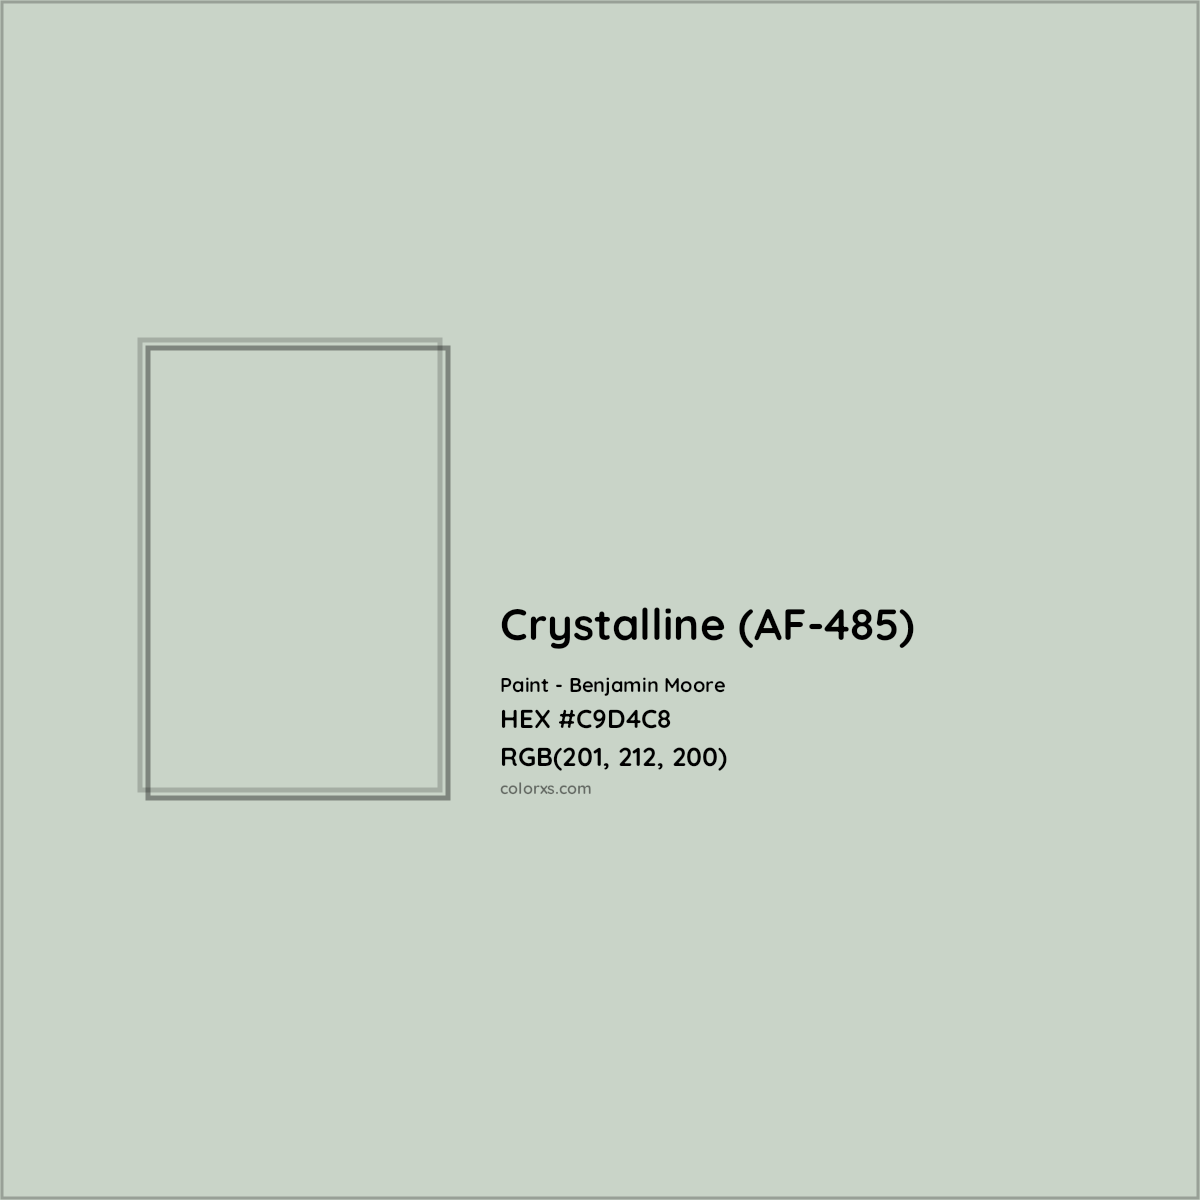 HEX #C9D4C8 Crystalline (AF-485) Paint Benjamin Moore - Color Code